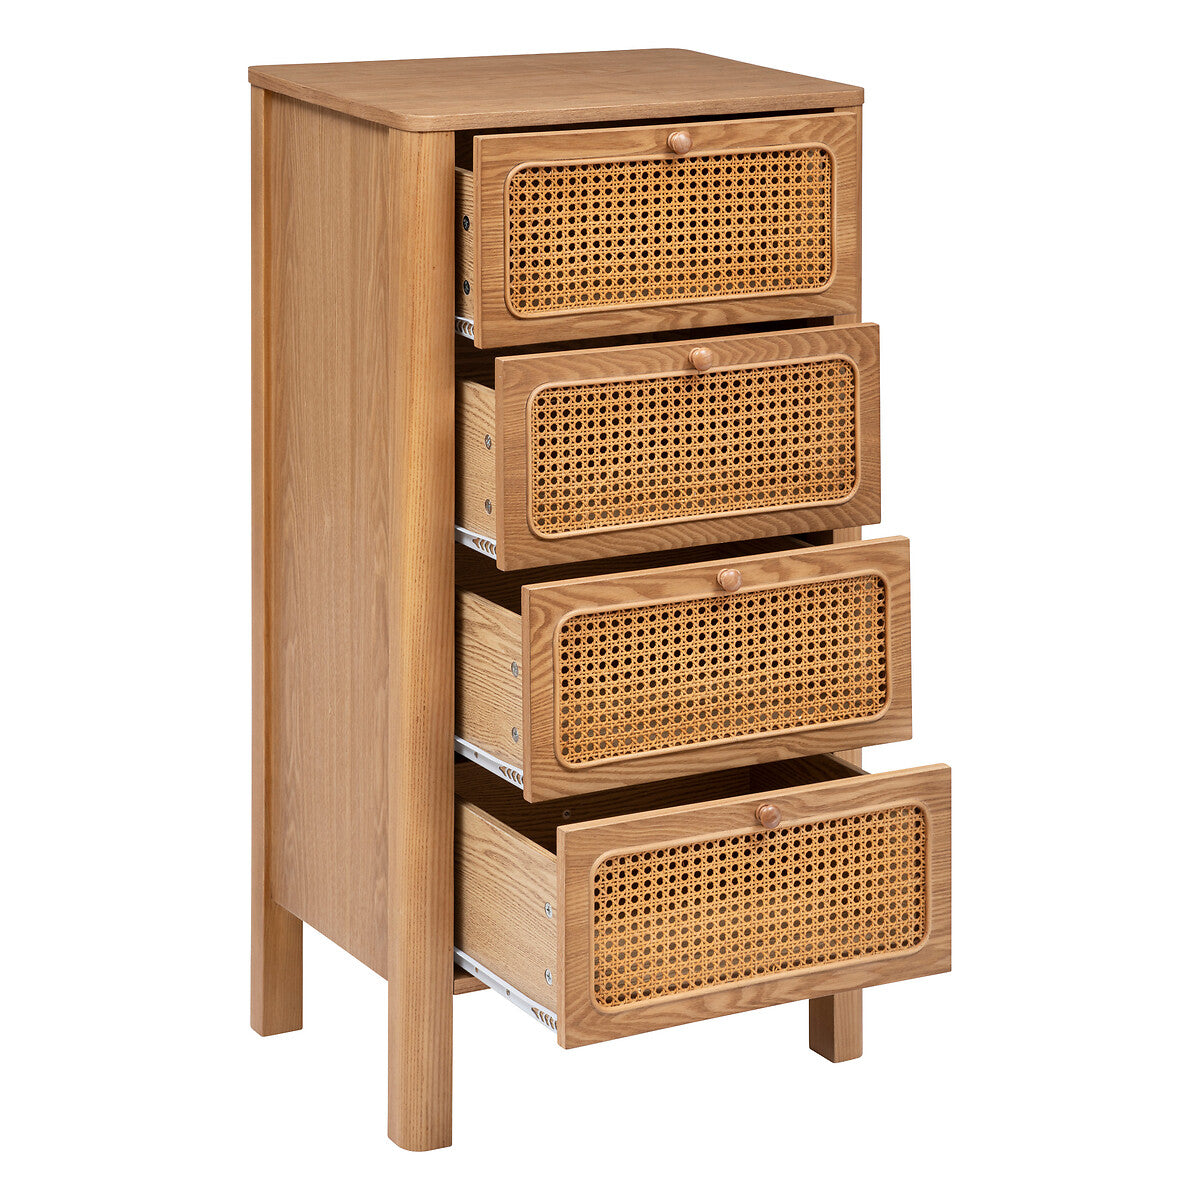 BEAU Ashley ash/rattan 4L chest of drawers - L55xD38xH103cm - Brown